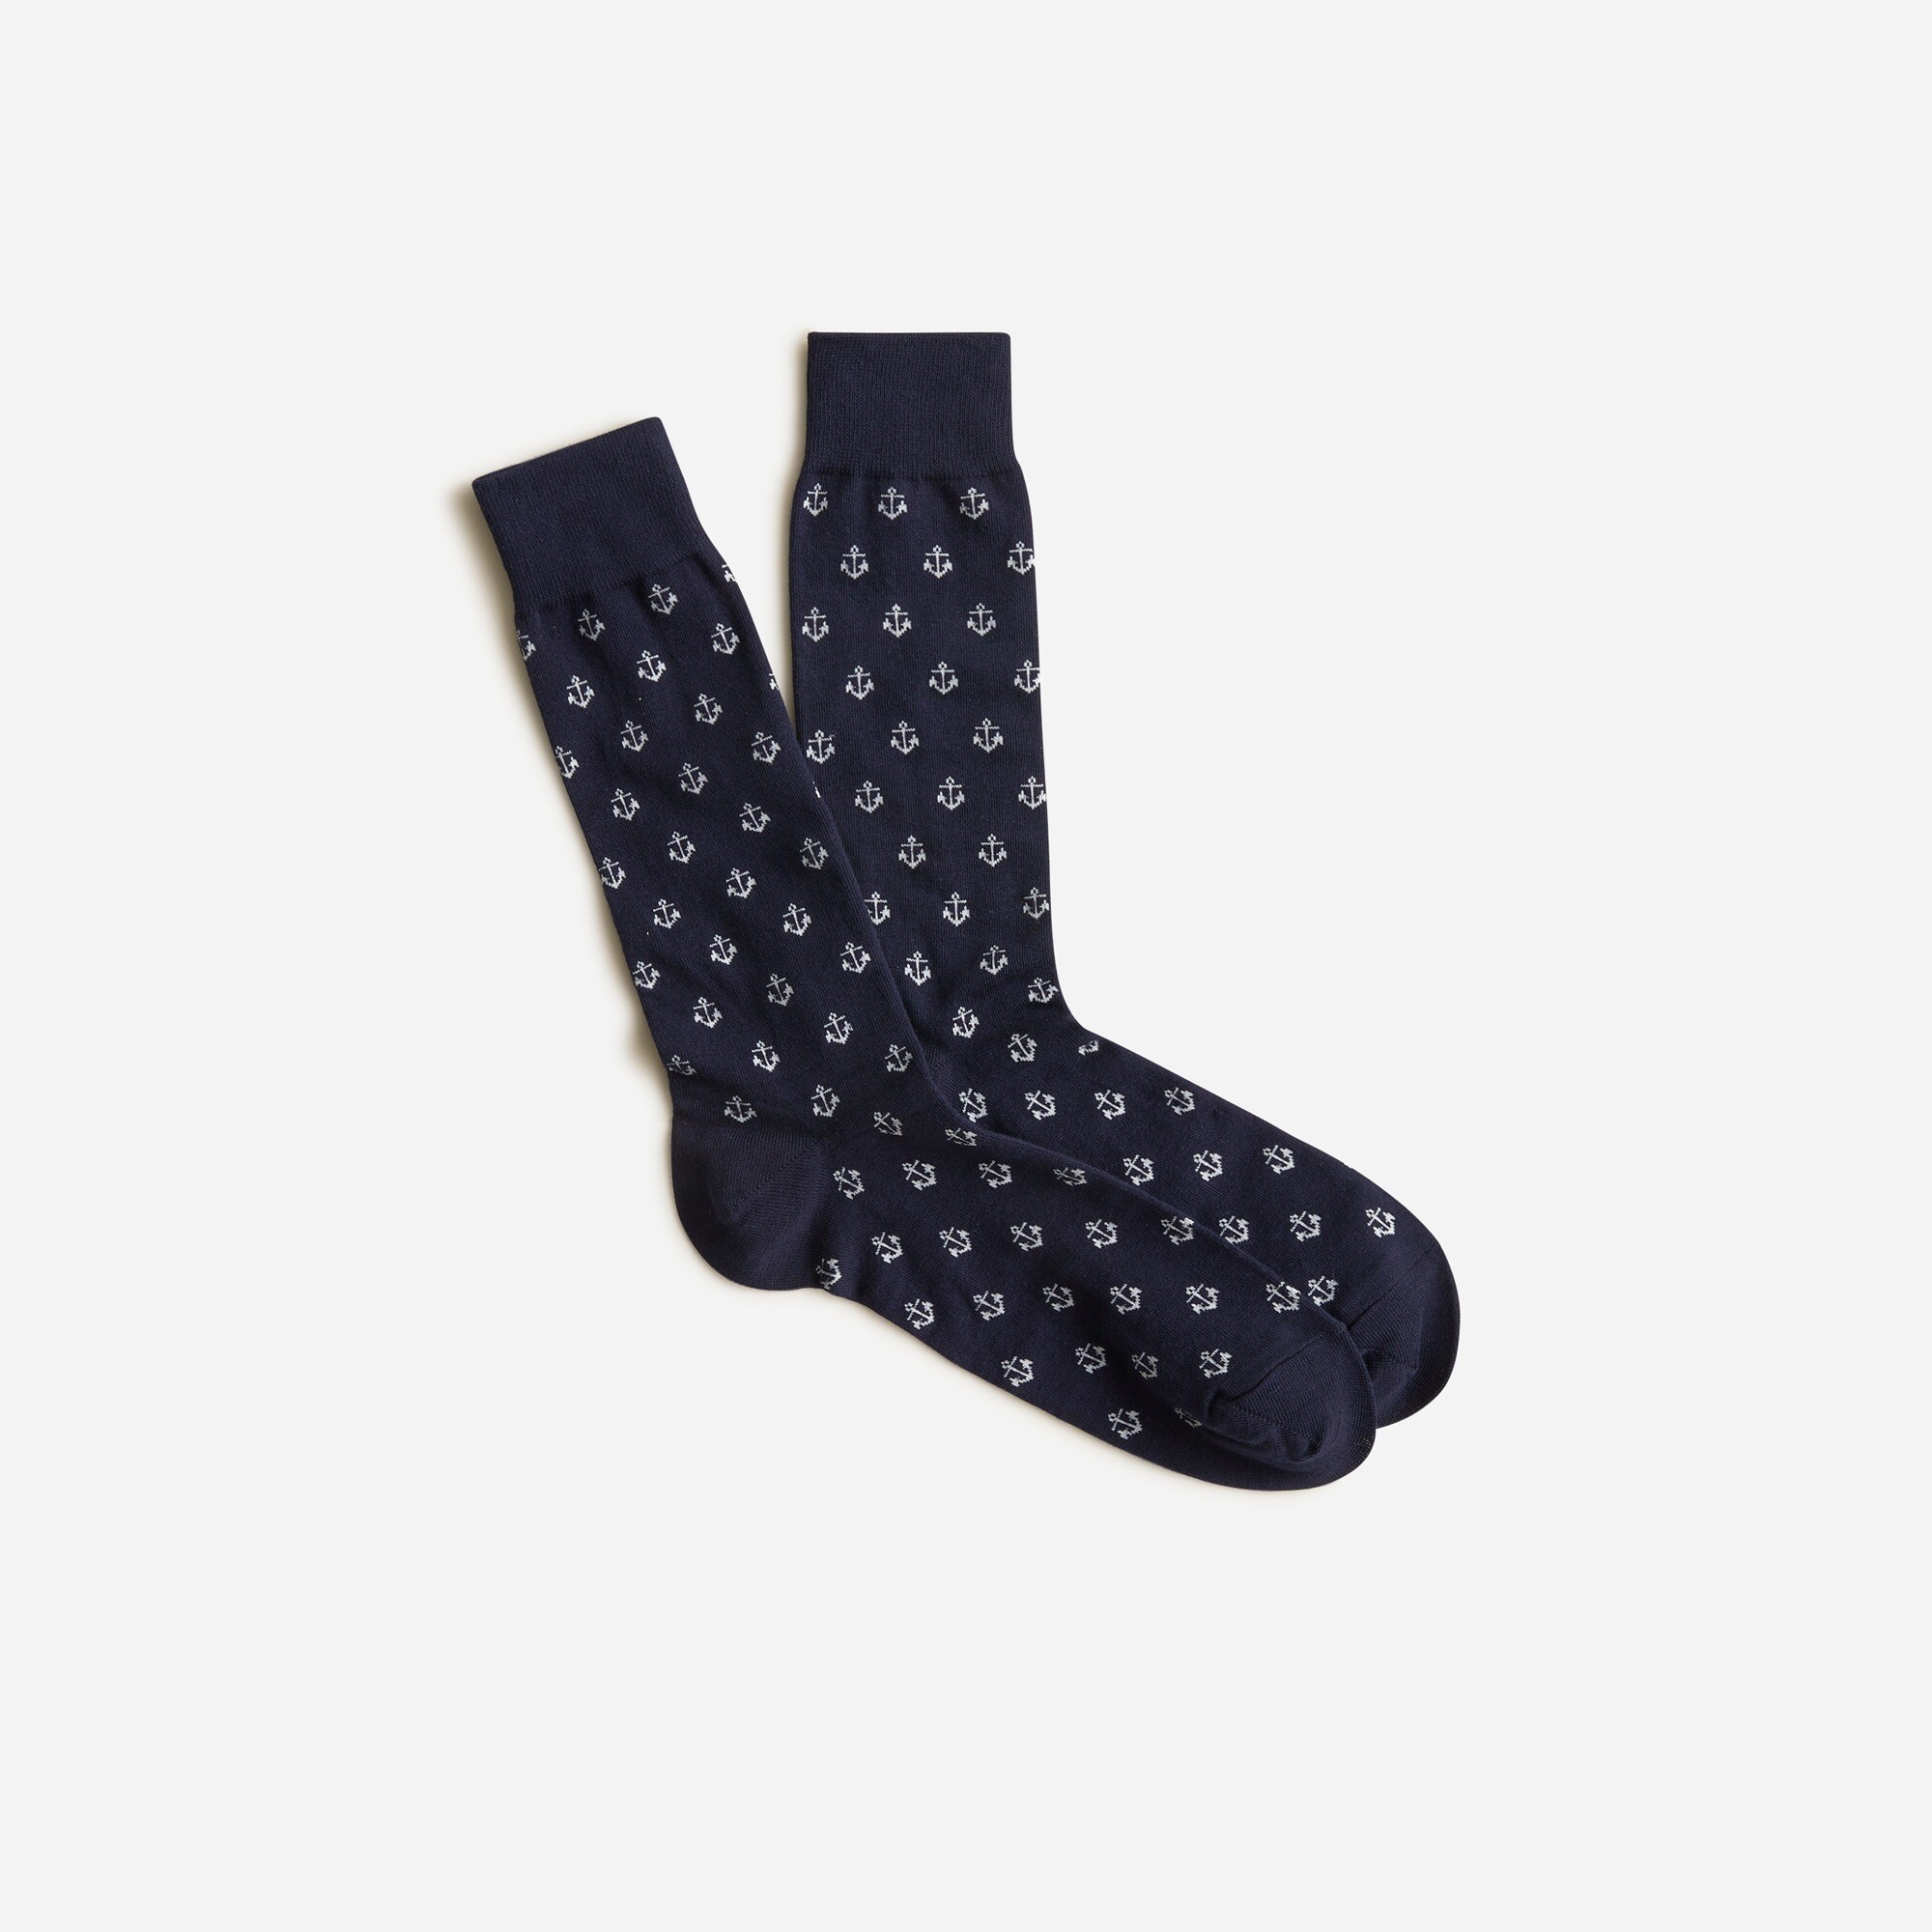 mens Anchor socks